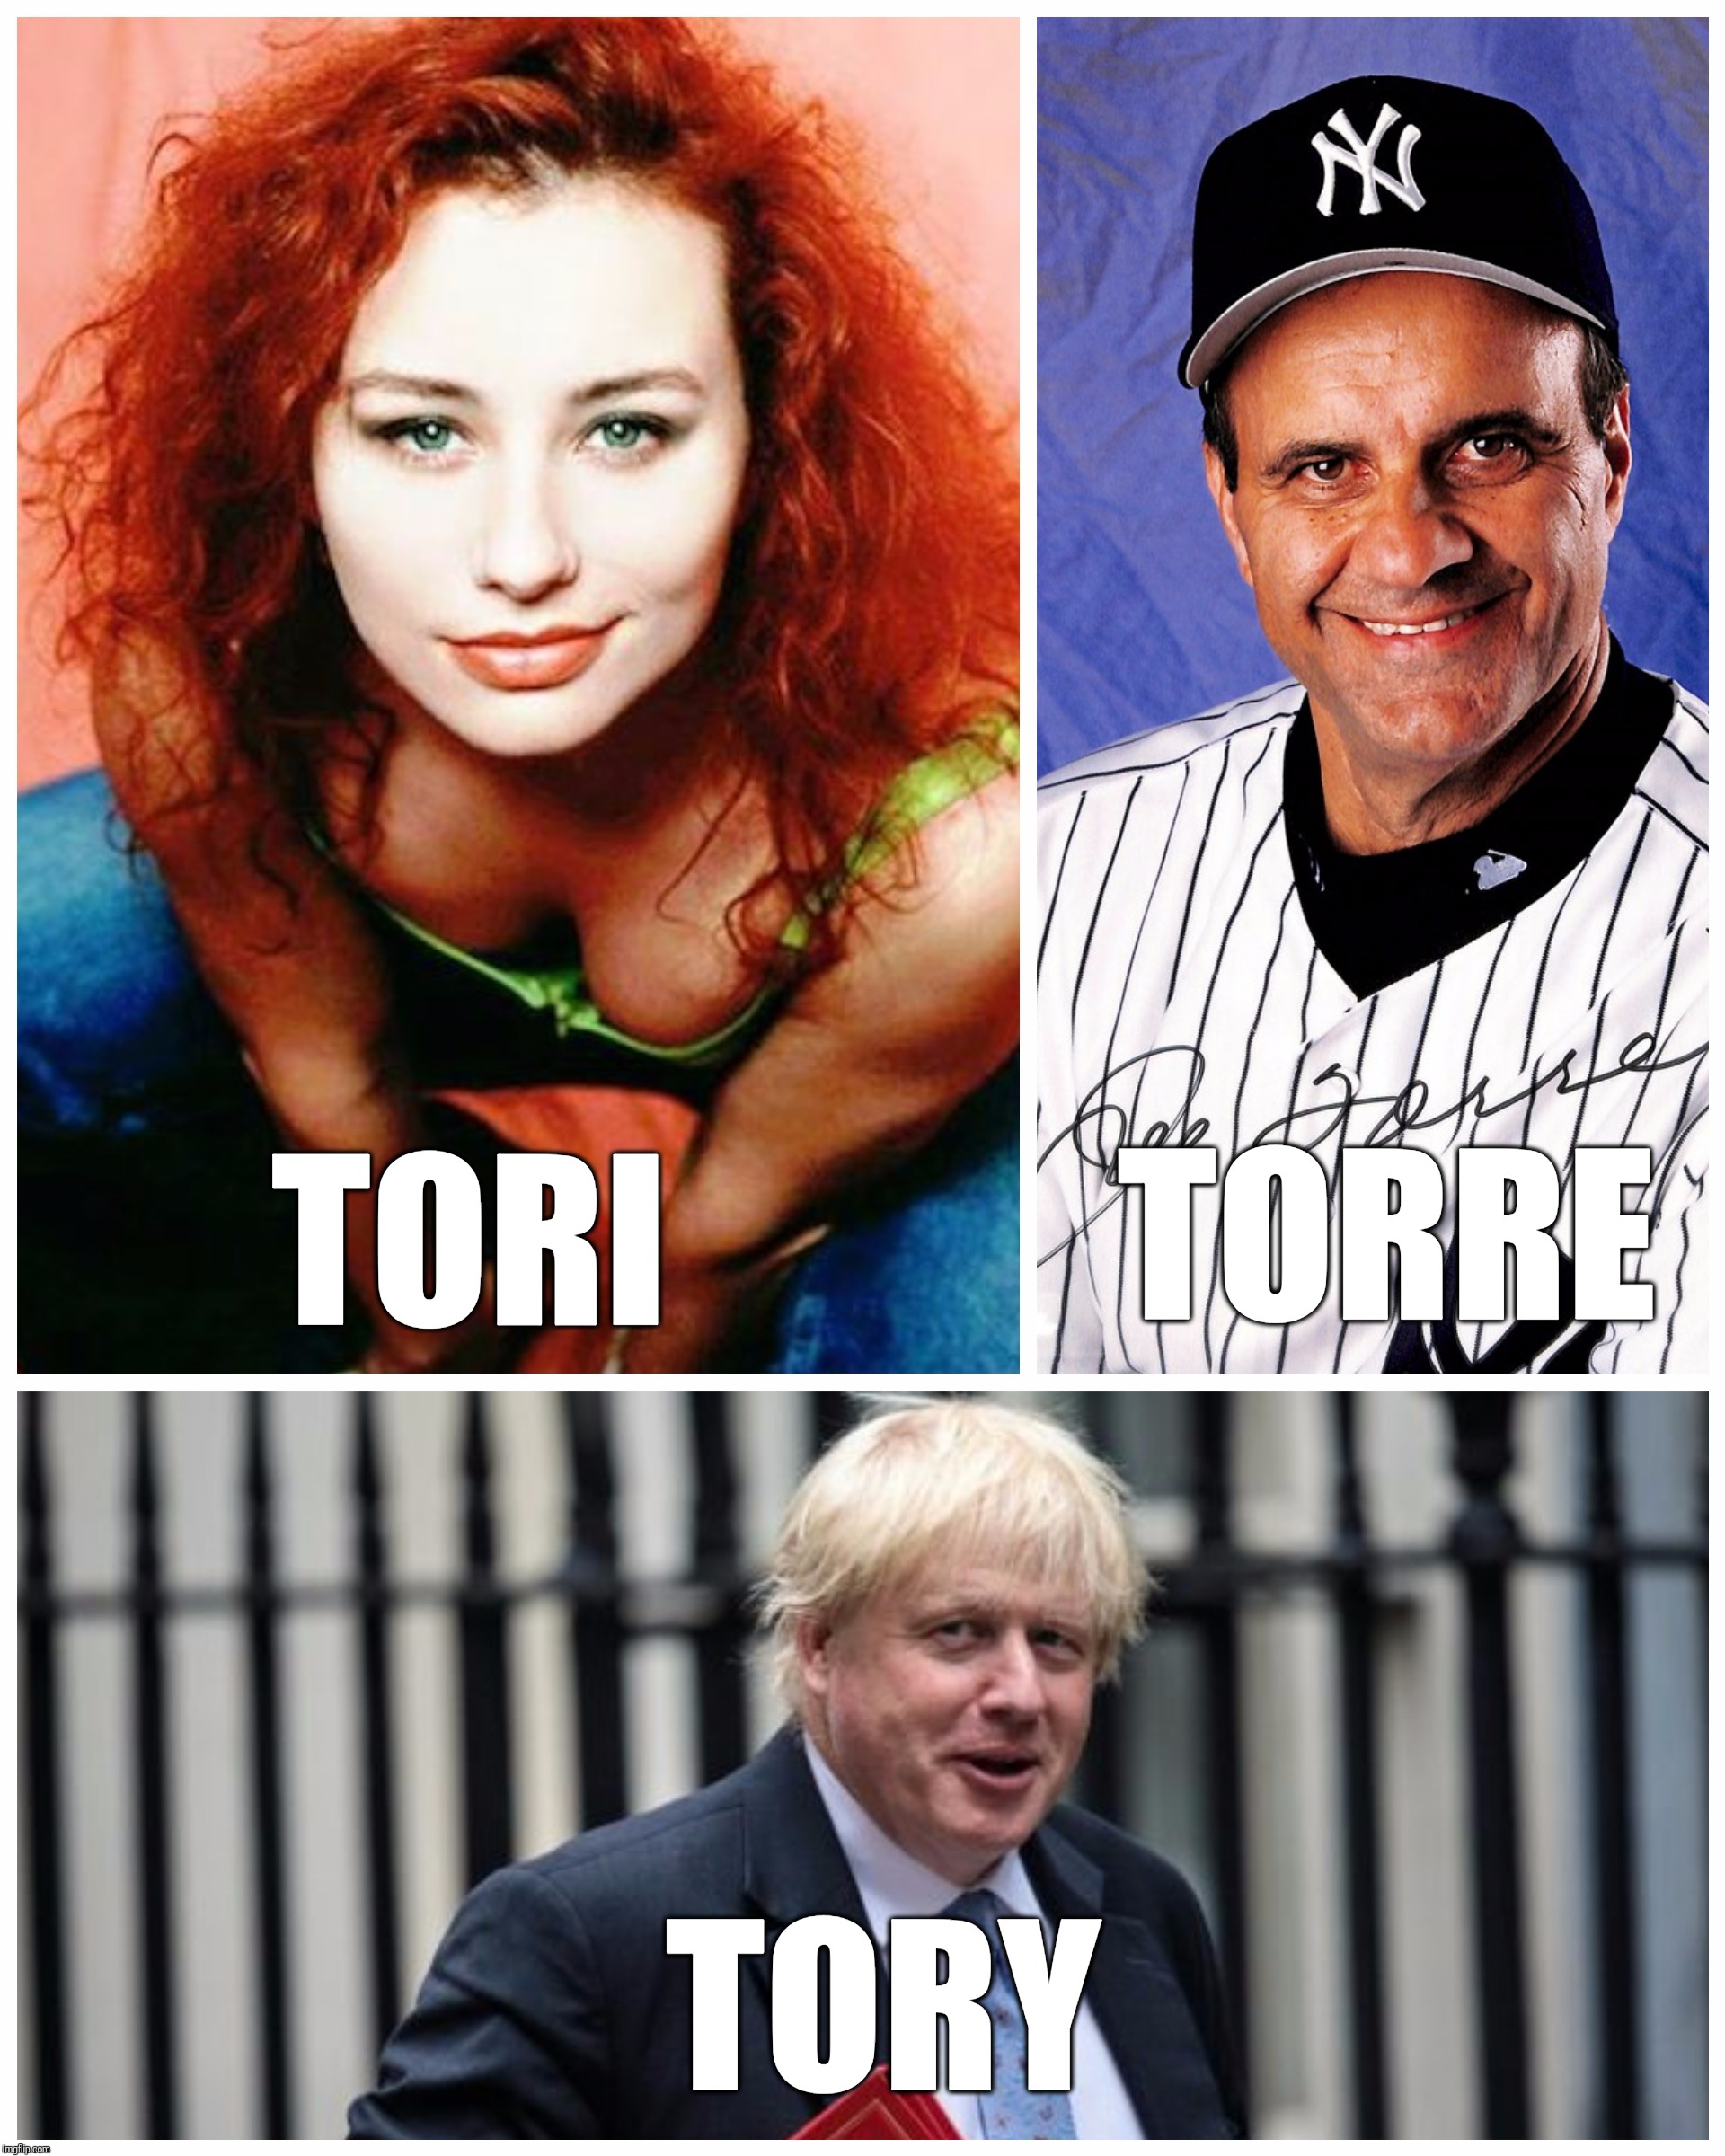 Tori Torre Tory | TORRE; TORI; TORY | image tagged in bands,tori amos,funny,yankees,boris johnson | made w/ Imgflip meme maker